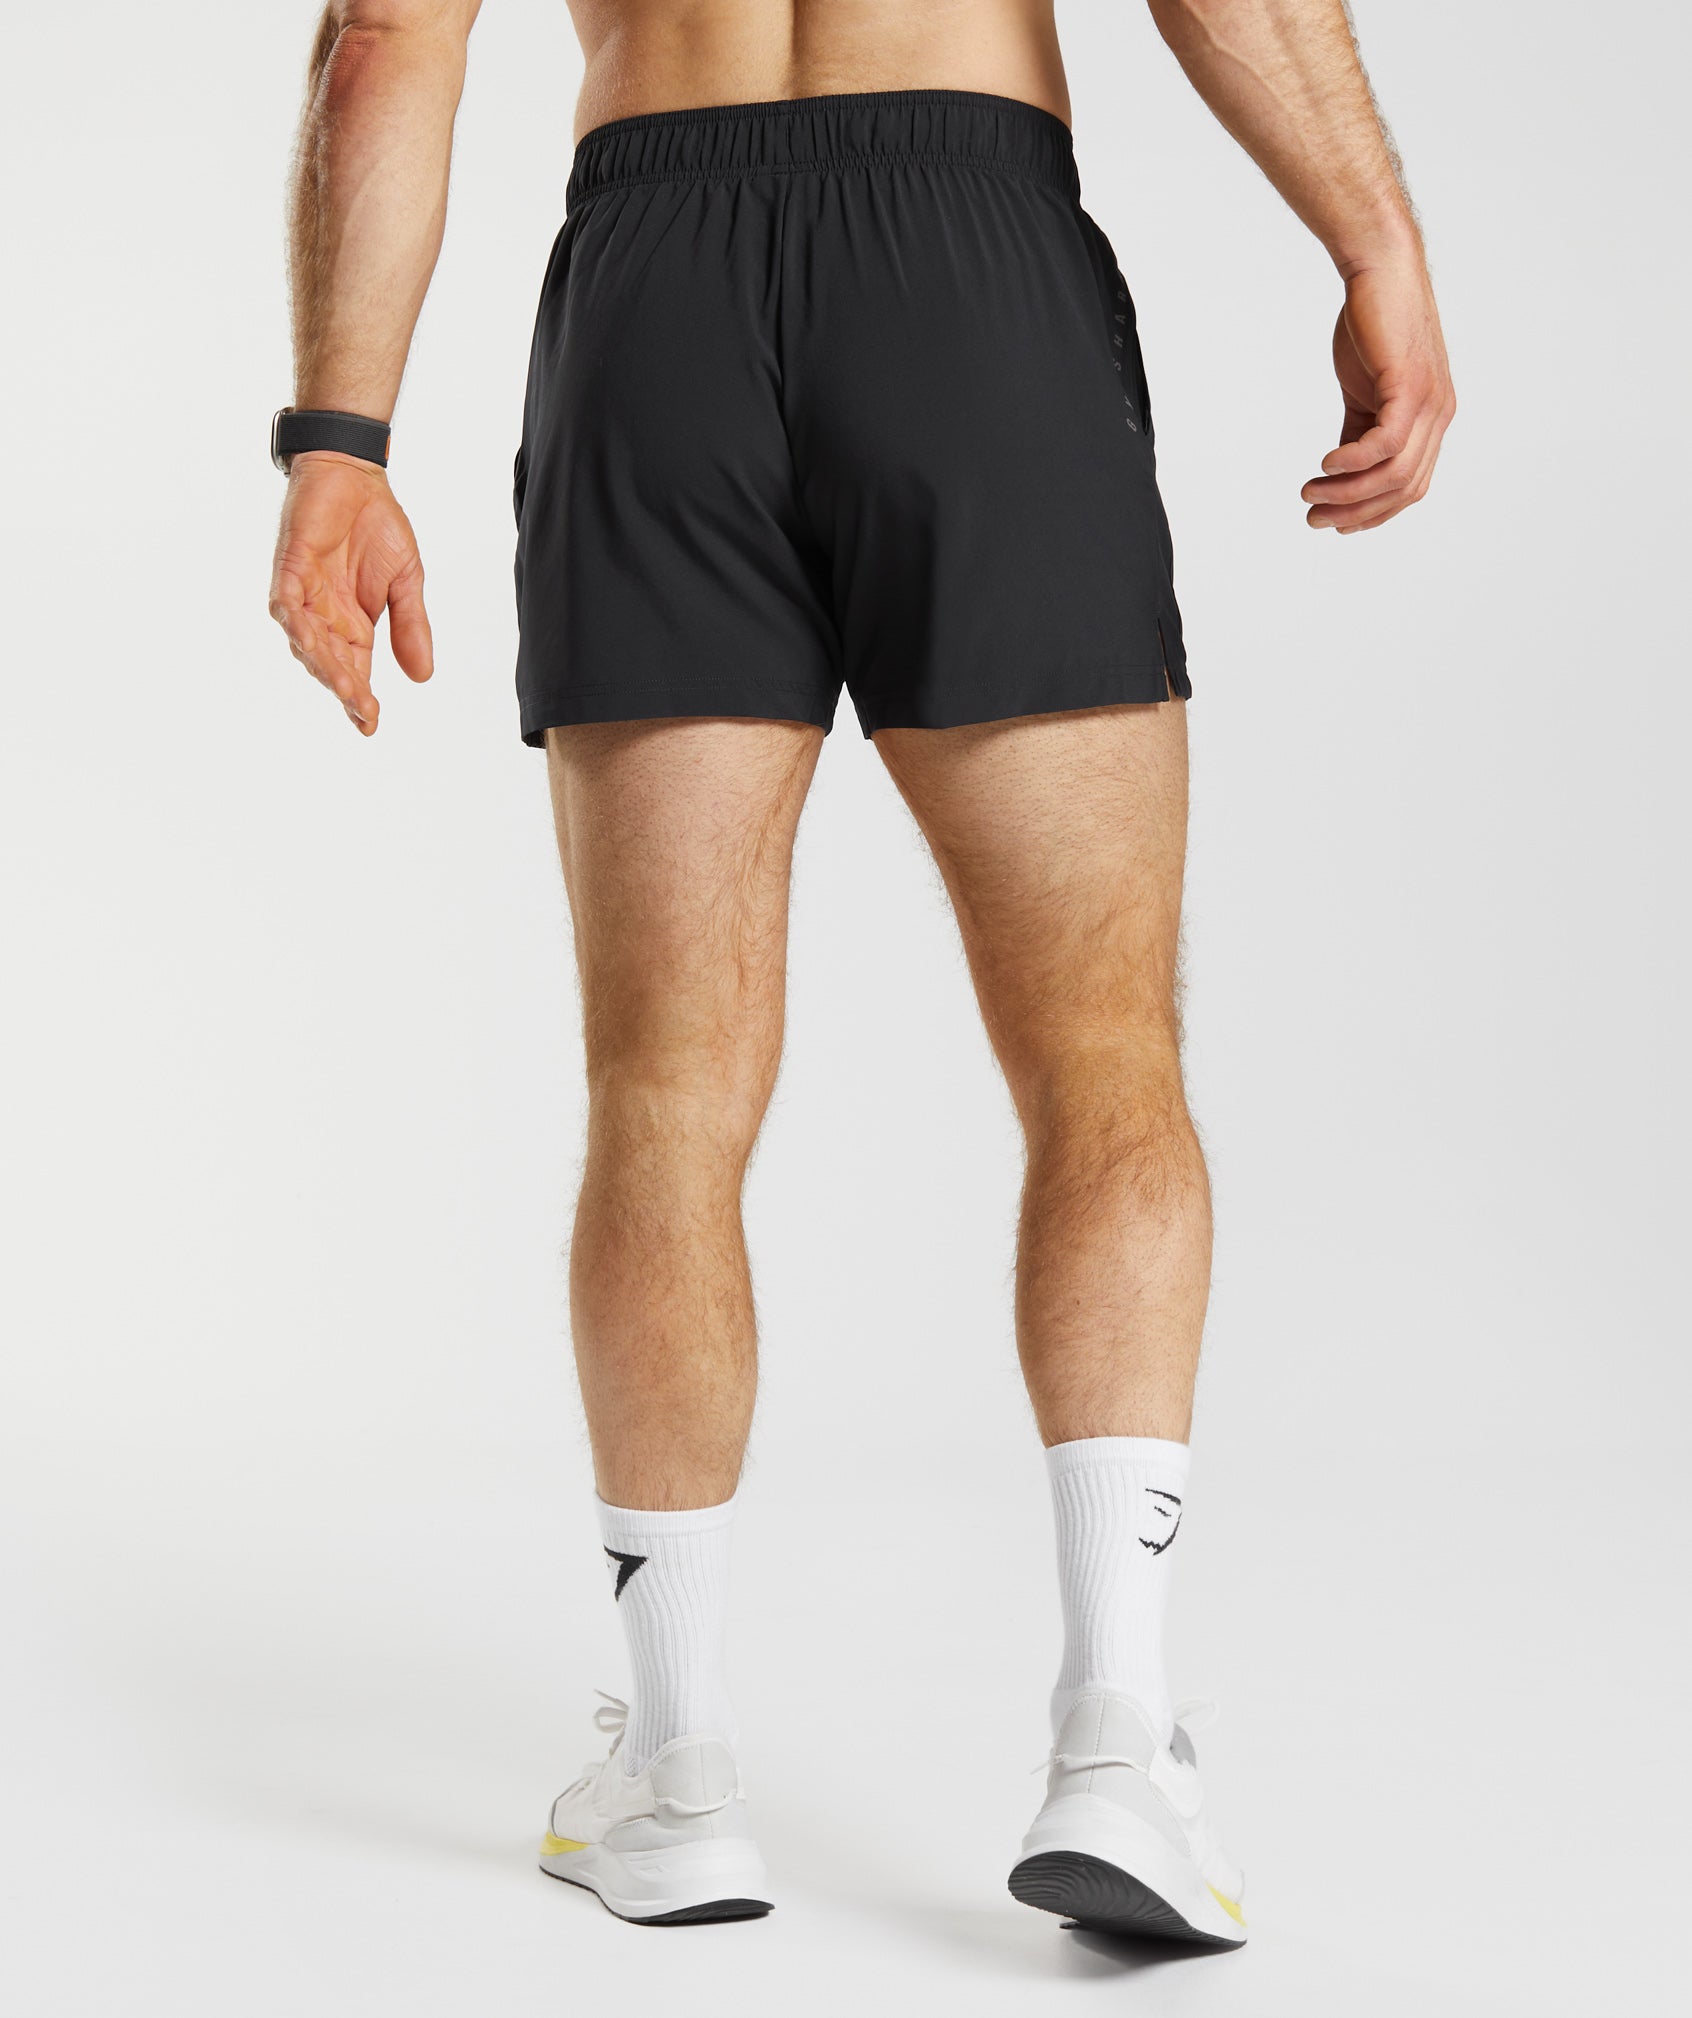 G Gradual Men's 7 Workout Running Shorts Quick Dry Lightweight Gym Shorts  with Zip Pockets (Green Medium)